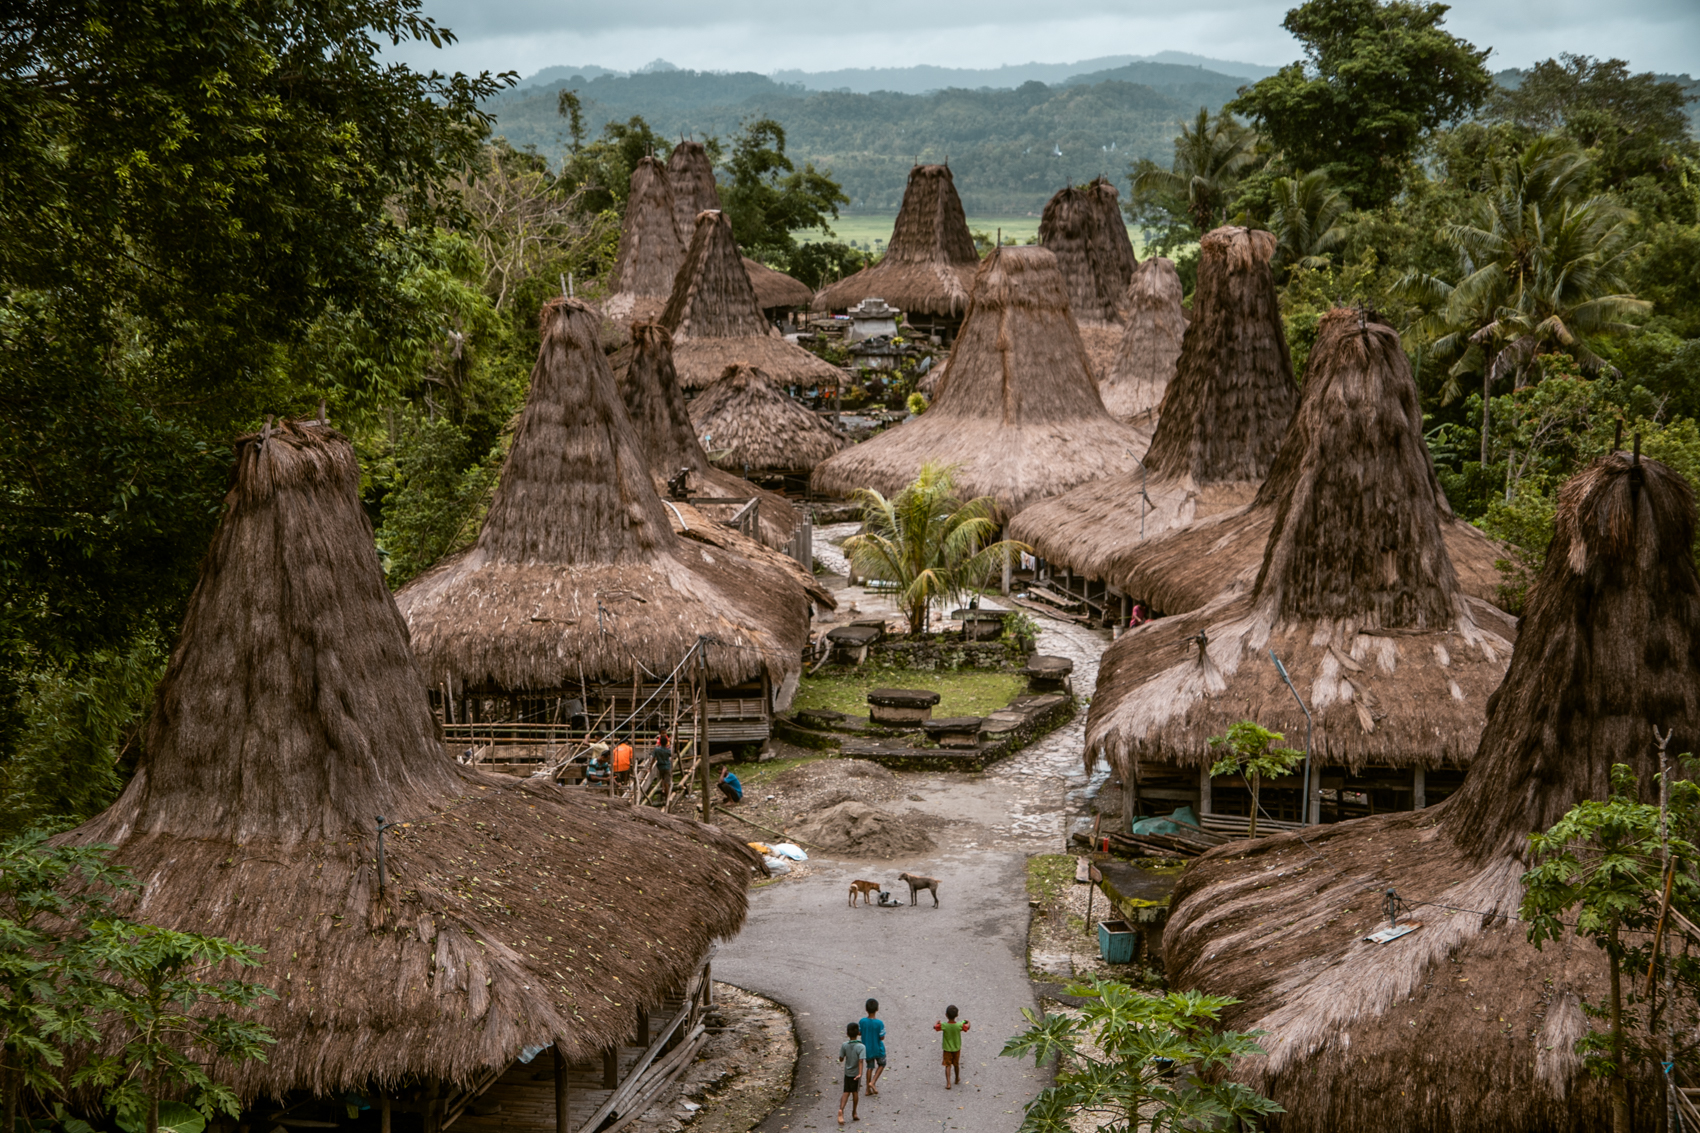 Mooiste authentieke plekken op aarde: Sumba, Indonesië